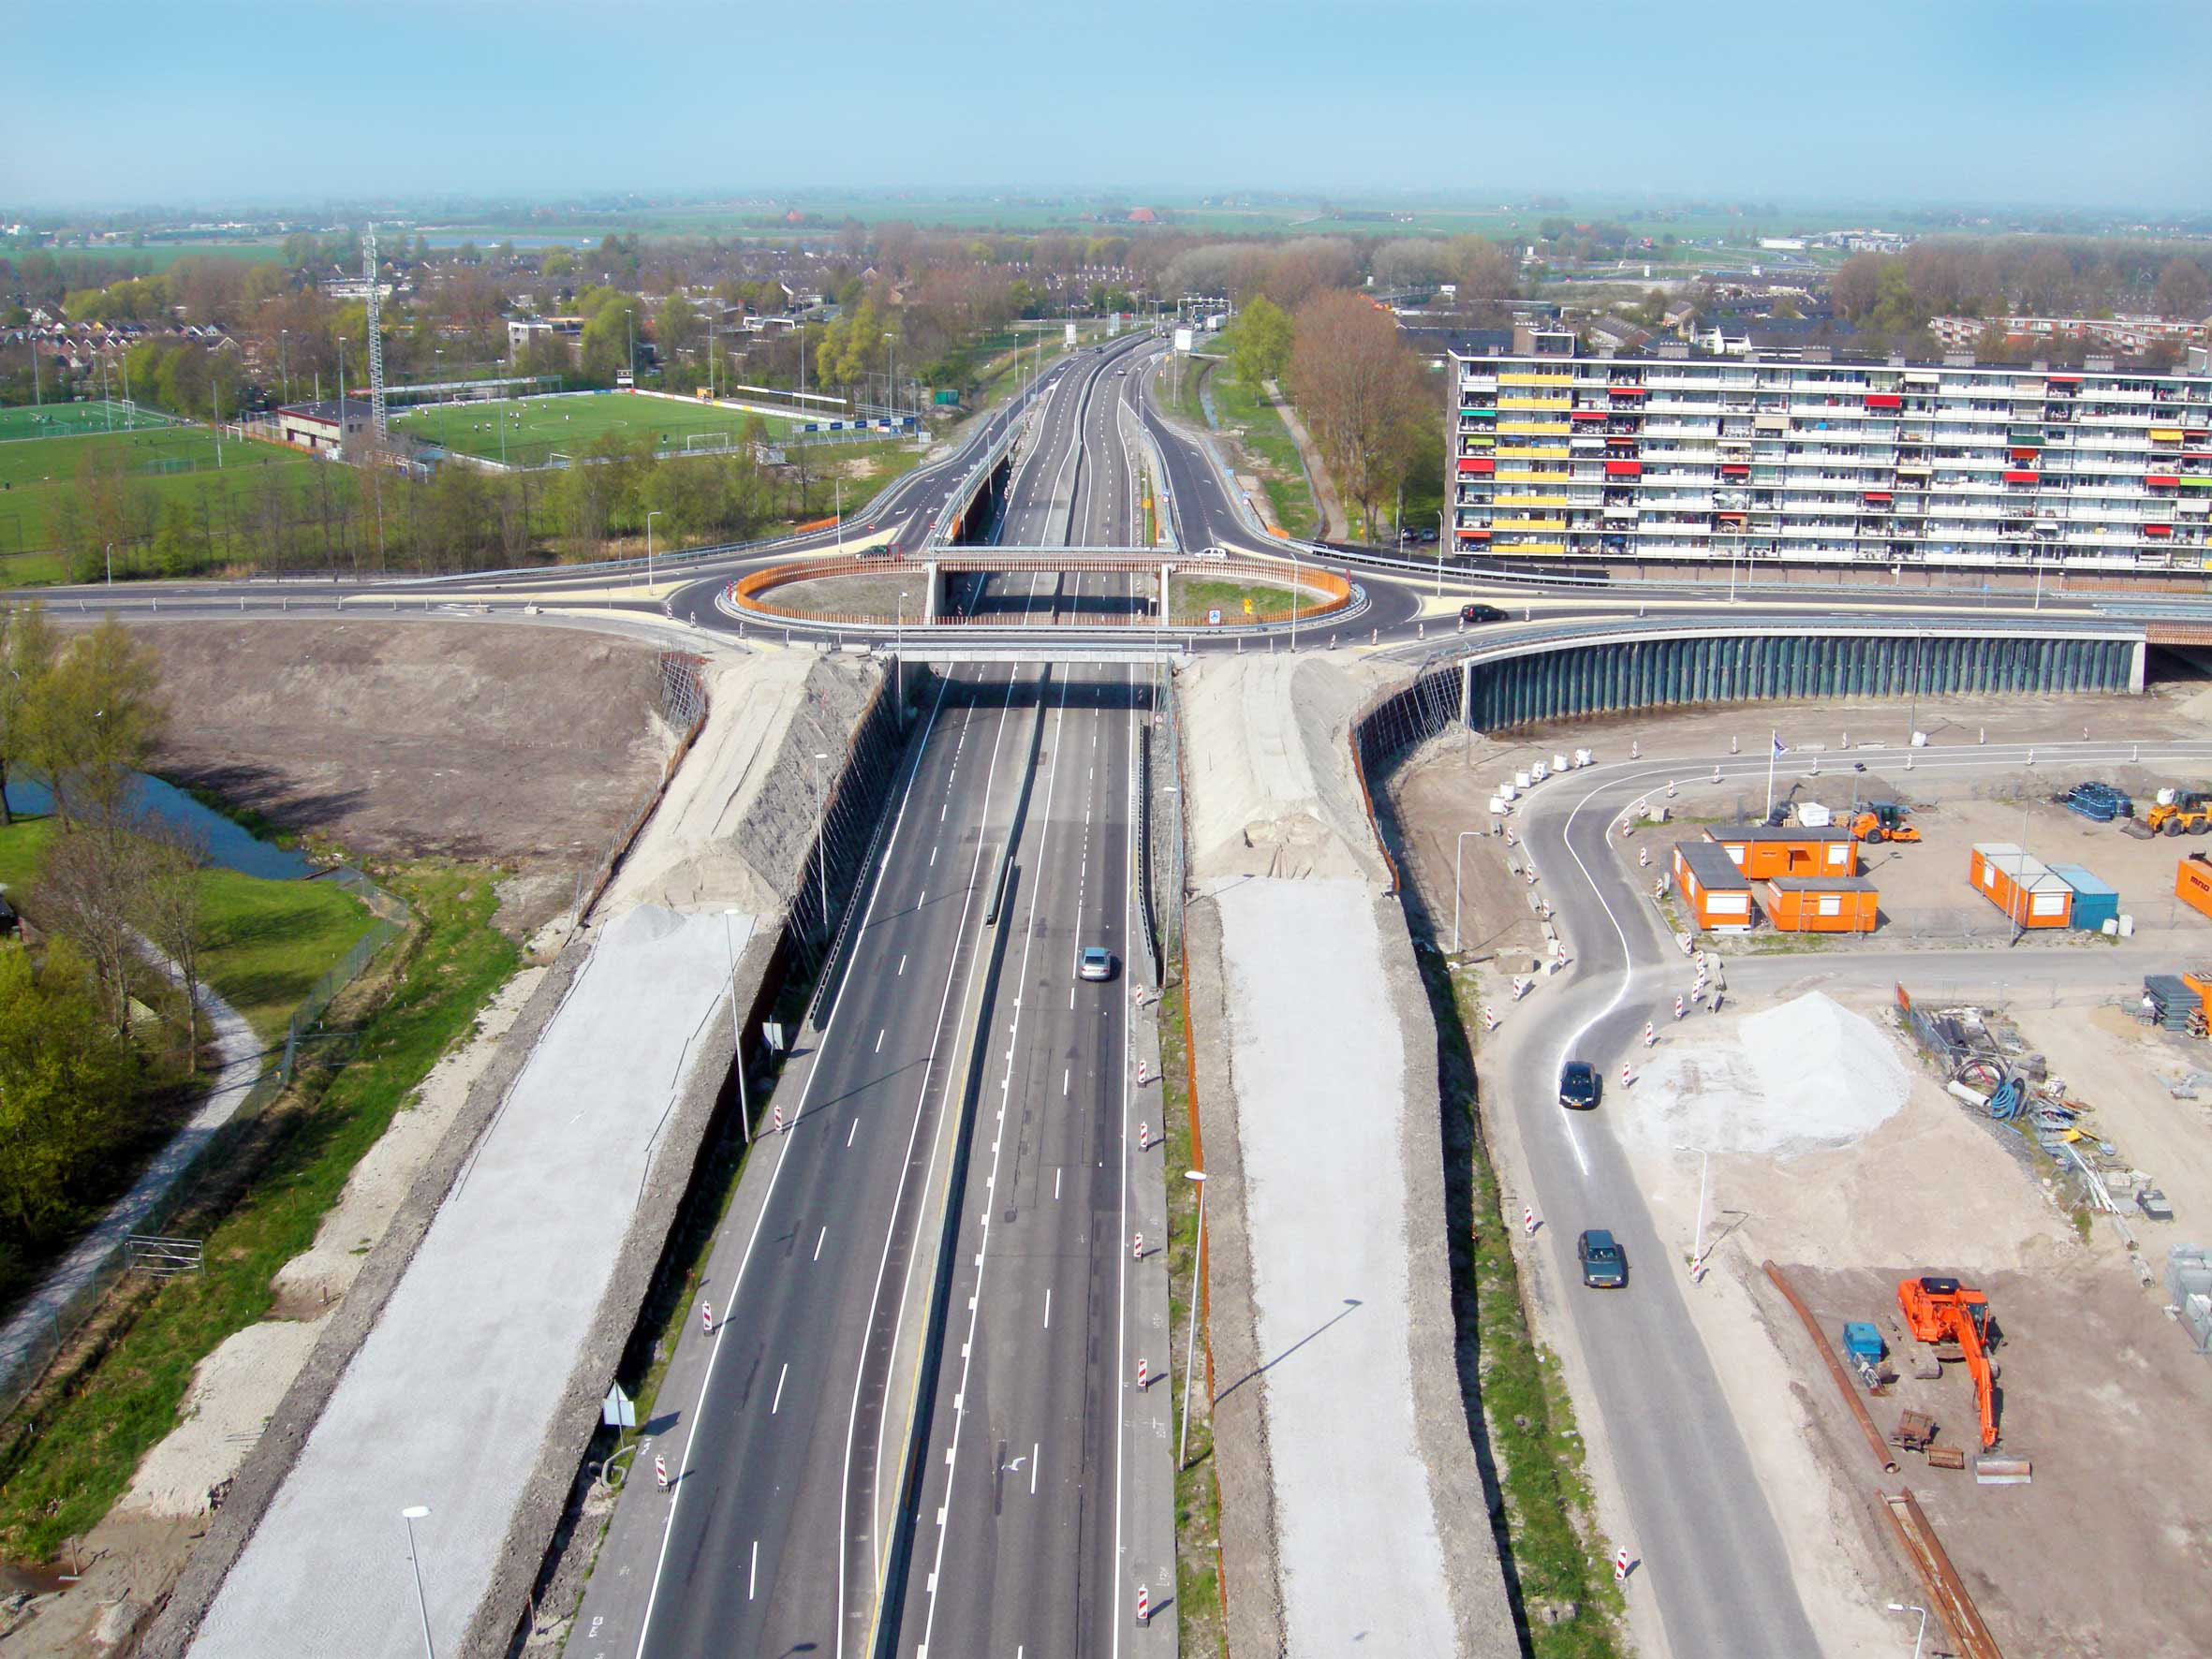 The A7 Motorway at Sneek, Friesland, Netherlands, and the new Lemmerweg interchange